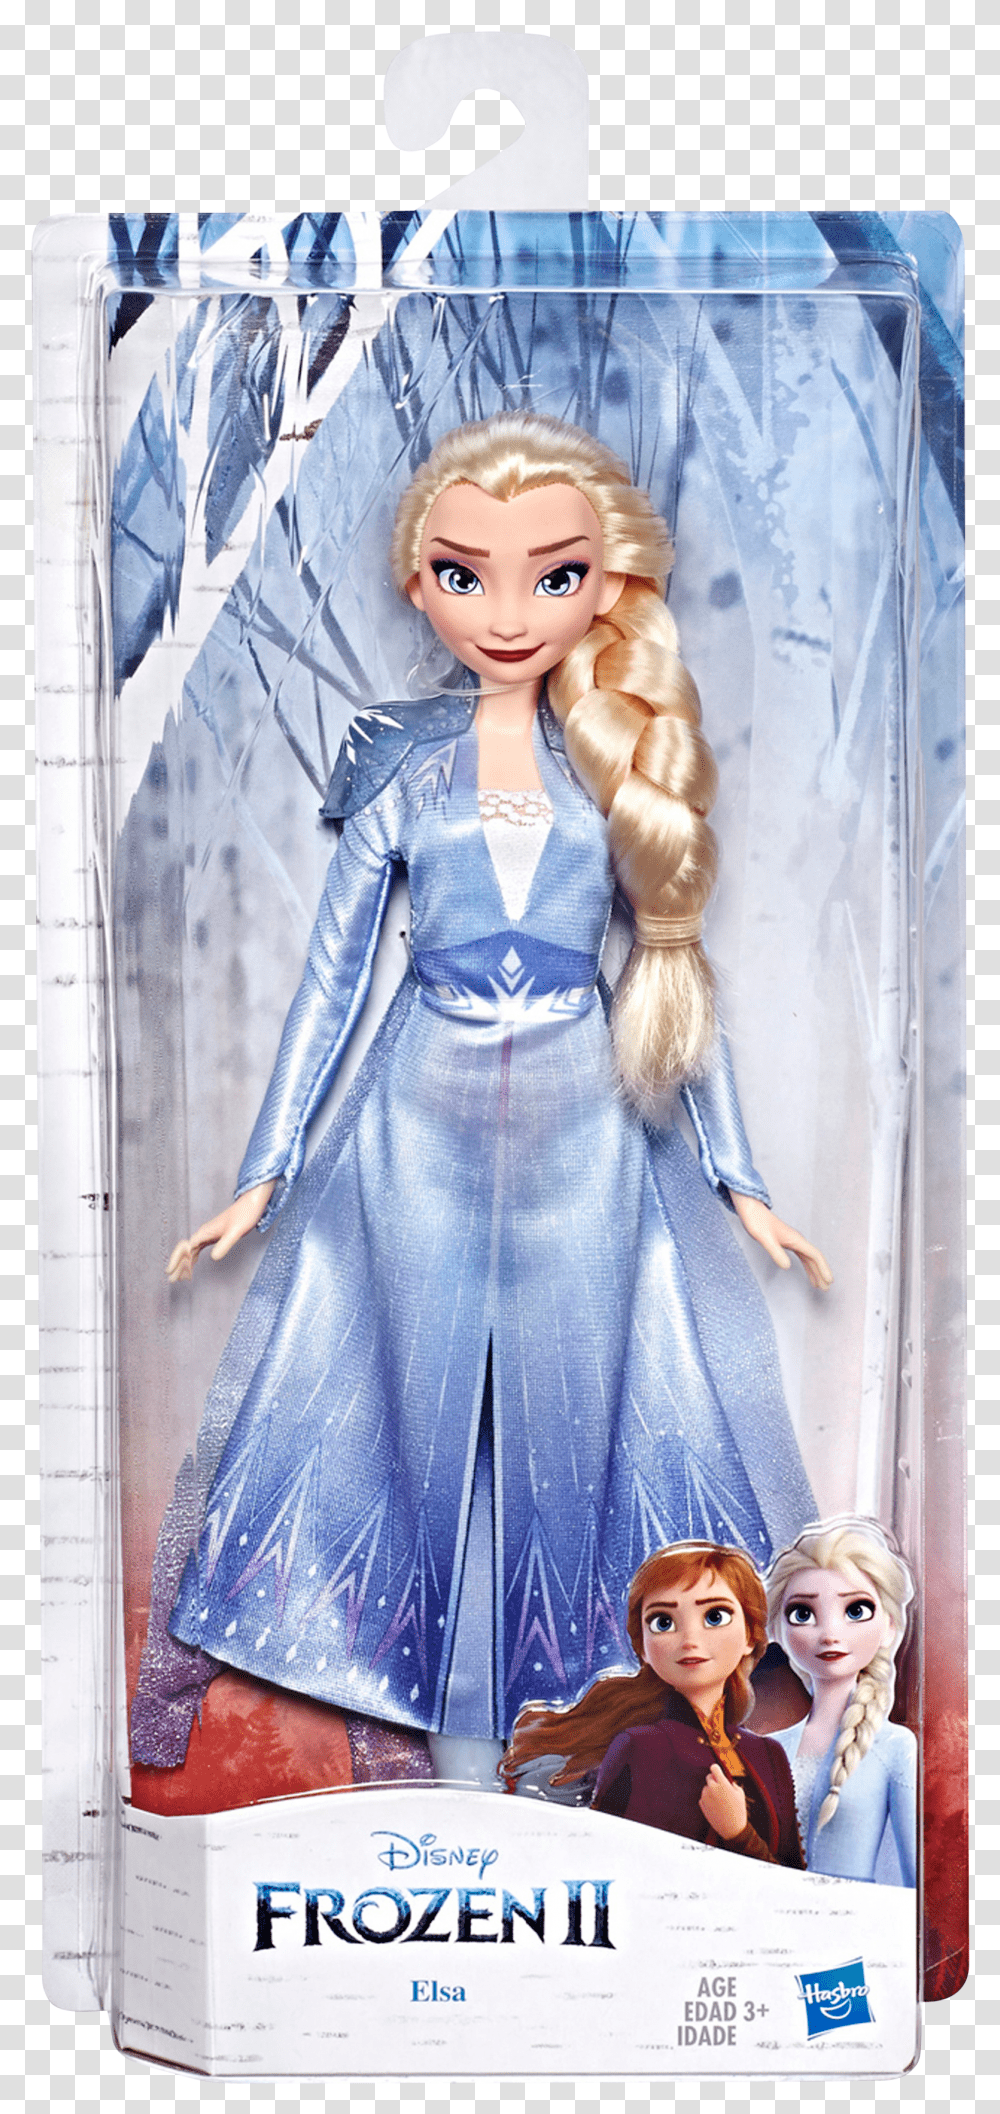 Frozen 2 Elsa Dukkeclass Product Main Photo Img Lazyload Disney Frozen 2 Movie Elsa Fashion Doll Transparent Png